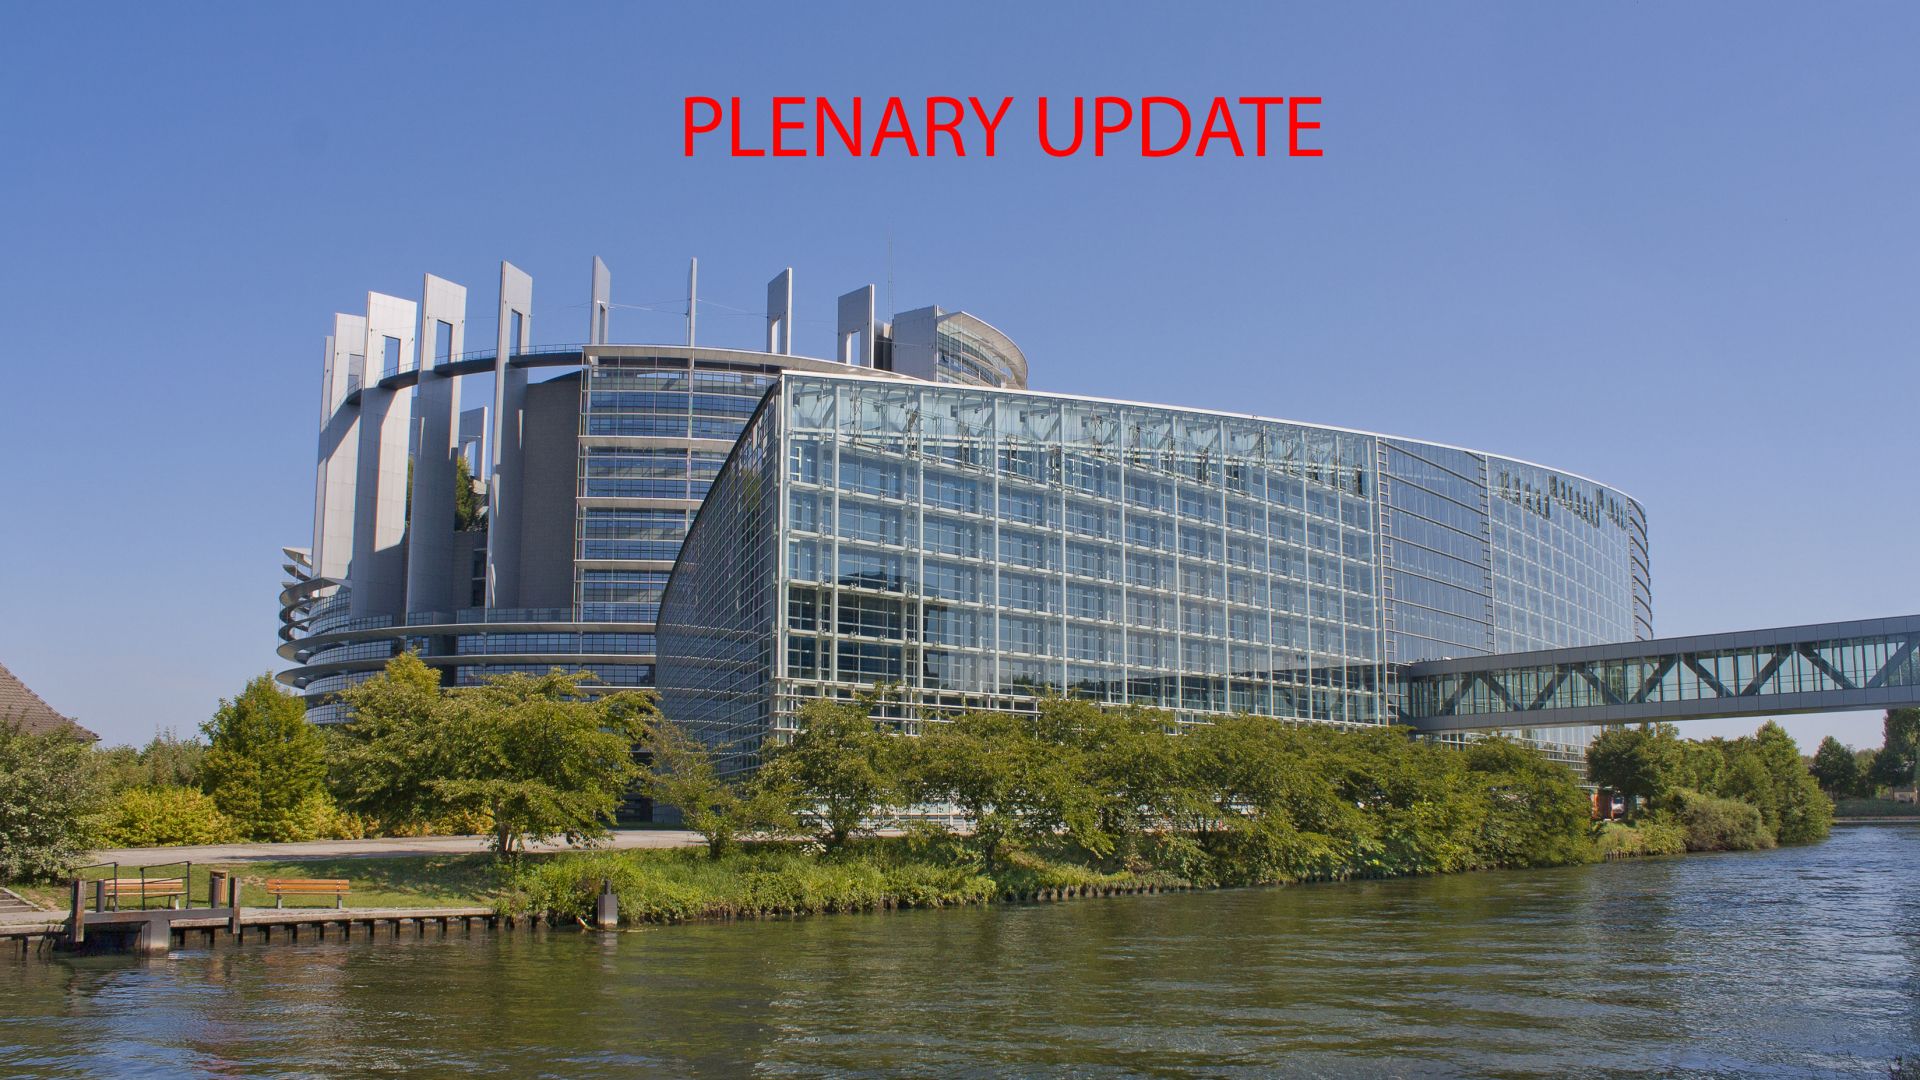 Strasbourg Plenary Session - EP building